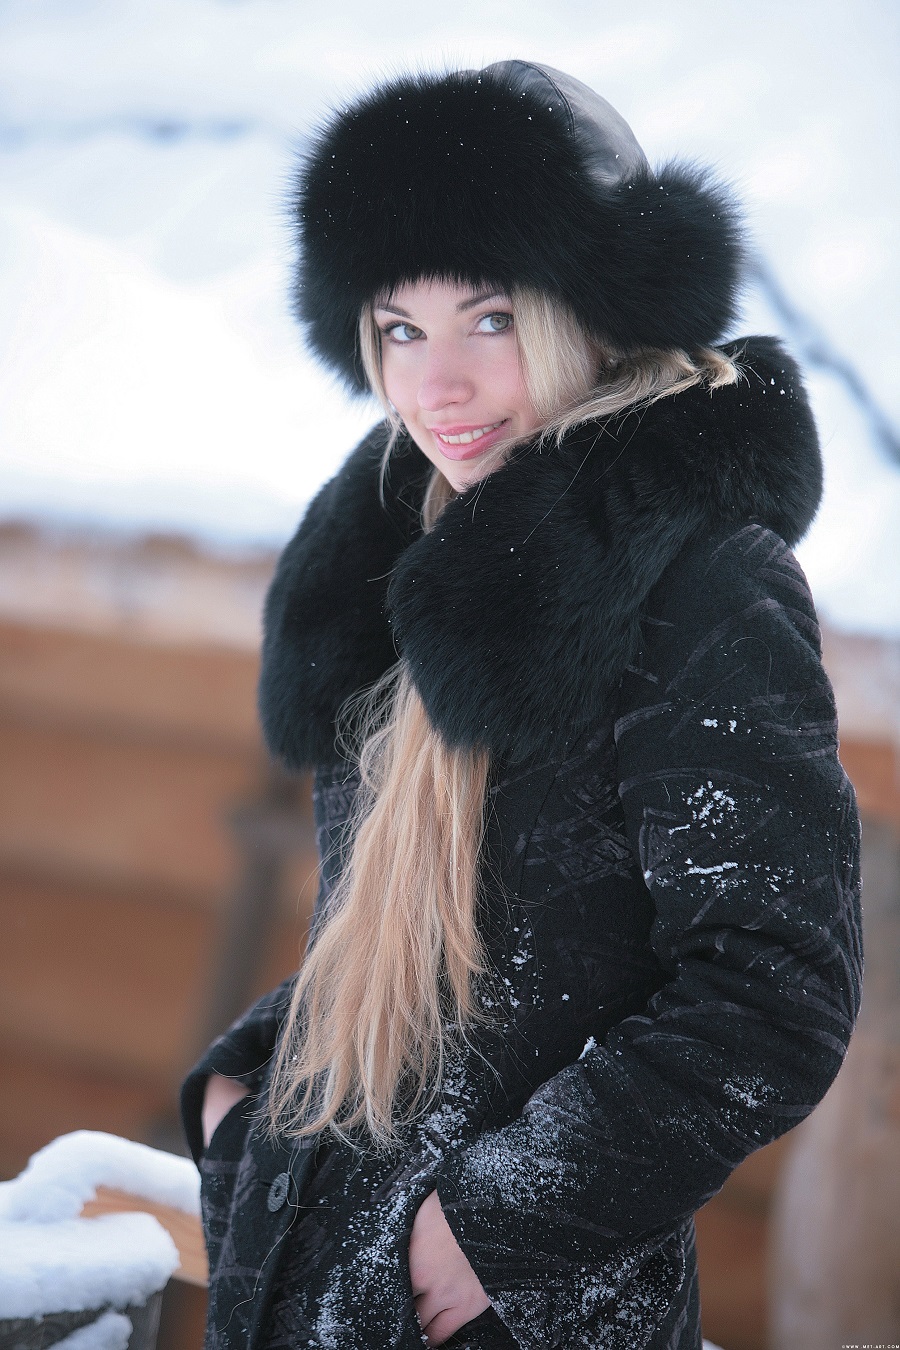 Model Blonde Winter Coats Black Coat Fur Cap Hands In Pockets Snow Snow Covered Women Outdoors Women 900x1350